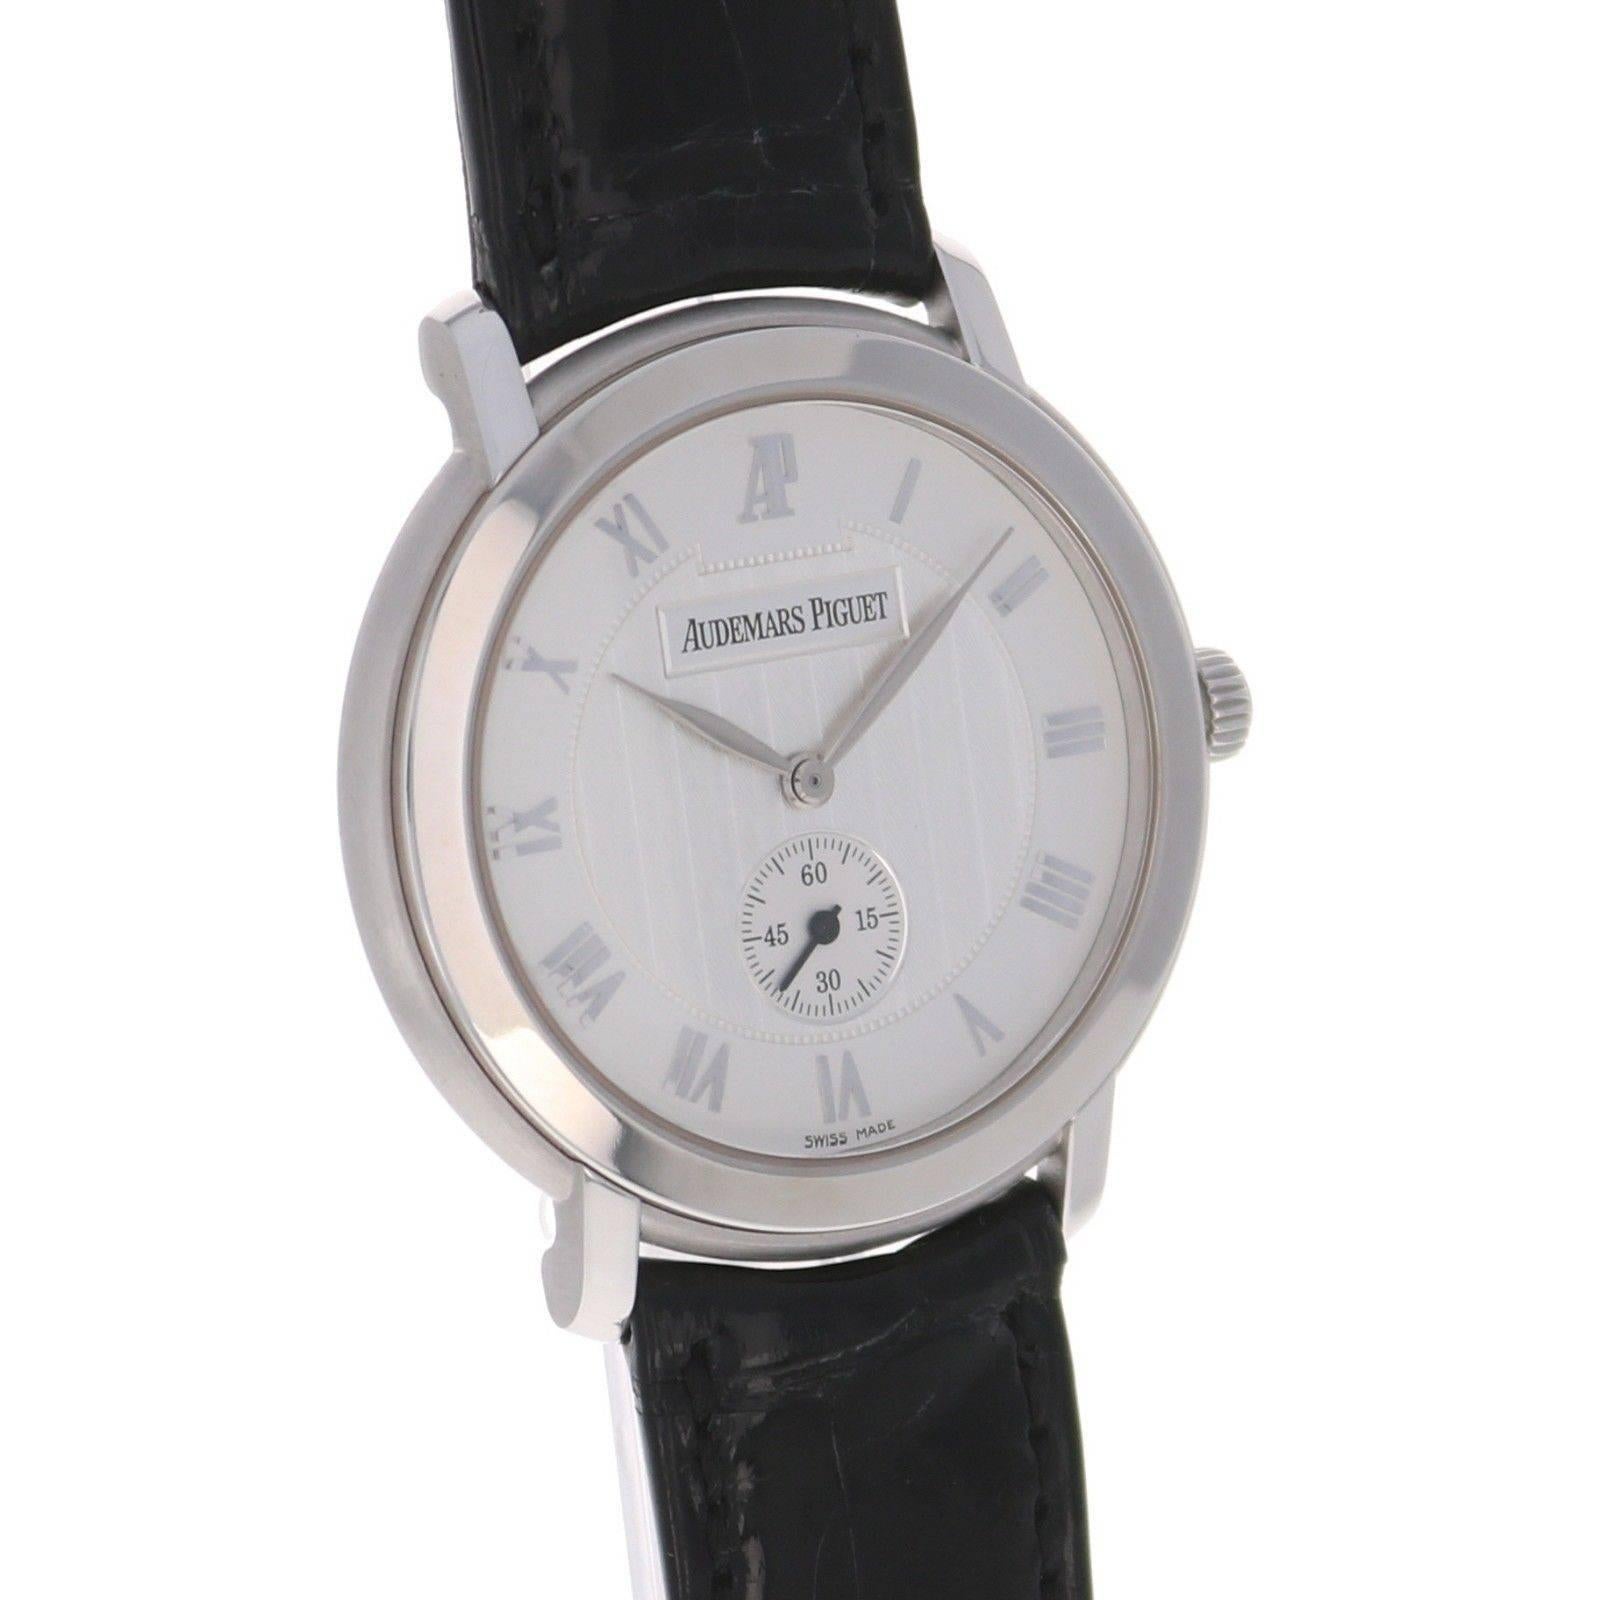 Audemars Piguet Jules Audemars Men's White Gold Small Seconds Manual Wristwatch For Sale 1